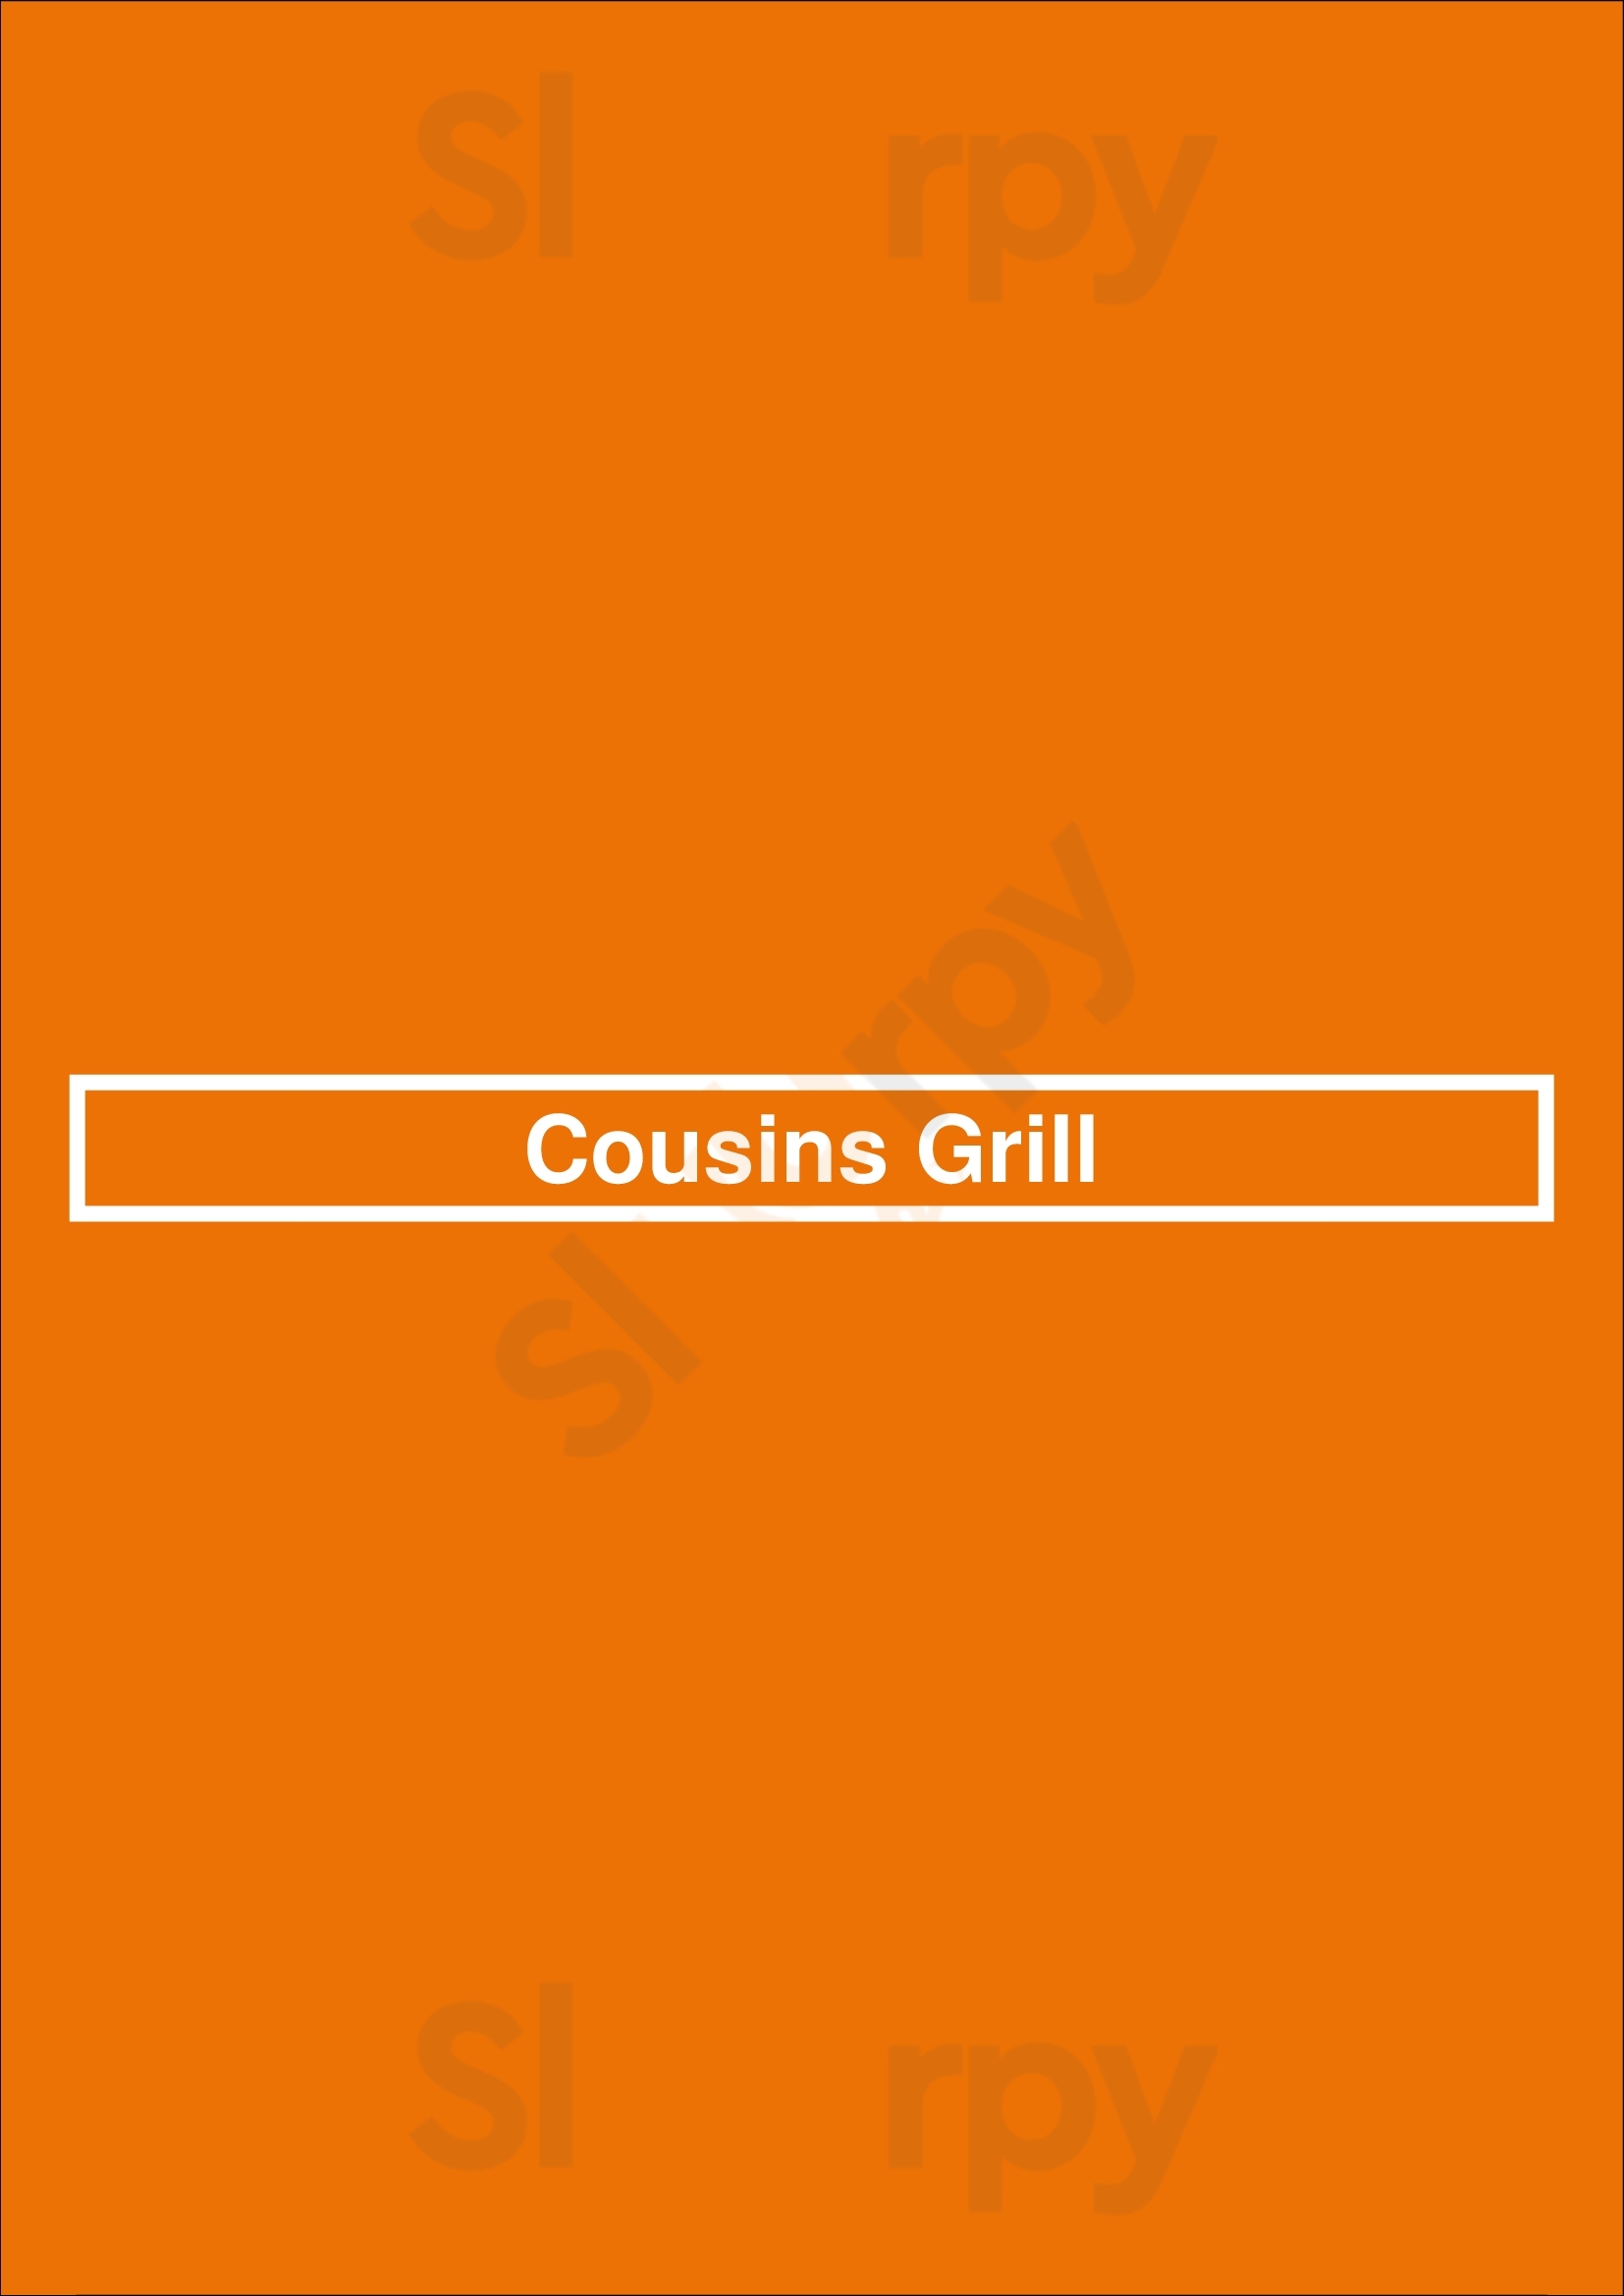 Cousins Grill Chicago Menu - 1